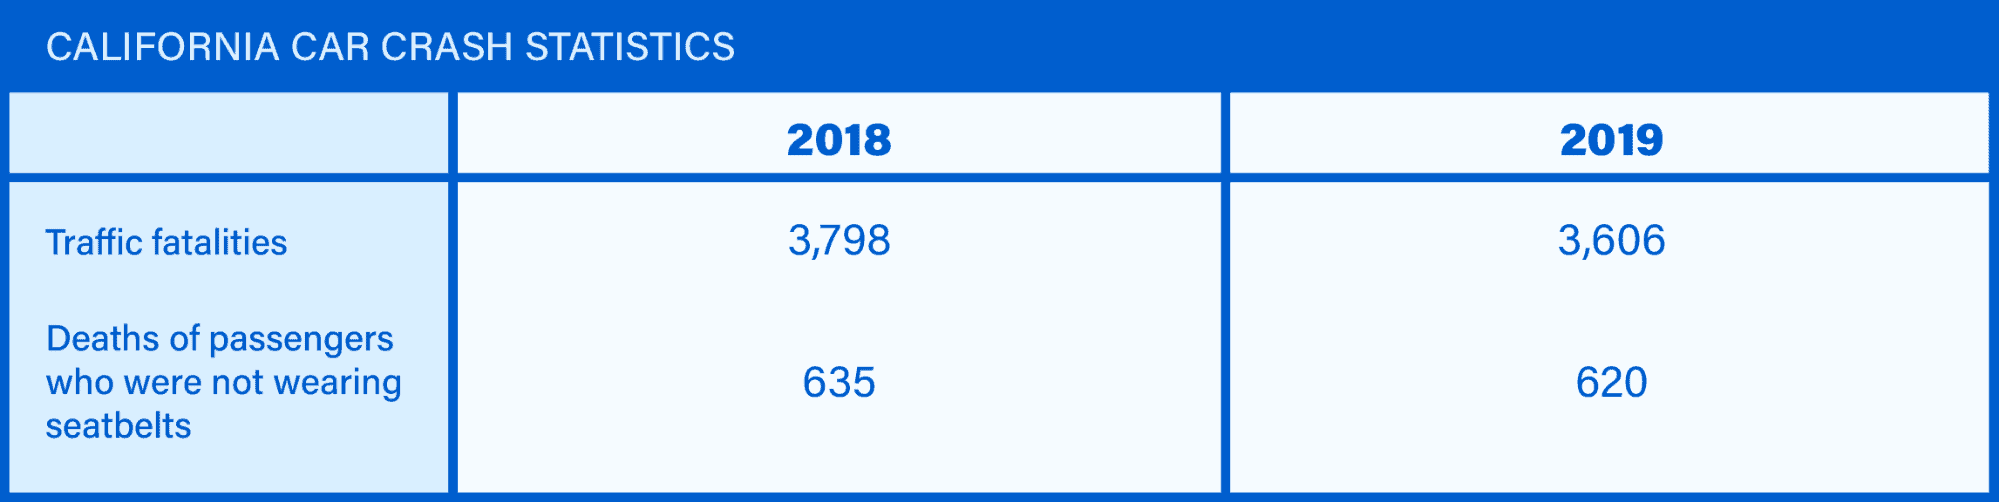 California Car Crash Statistics 2018 and 2019